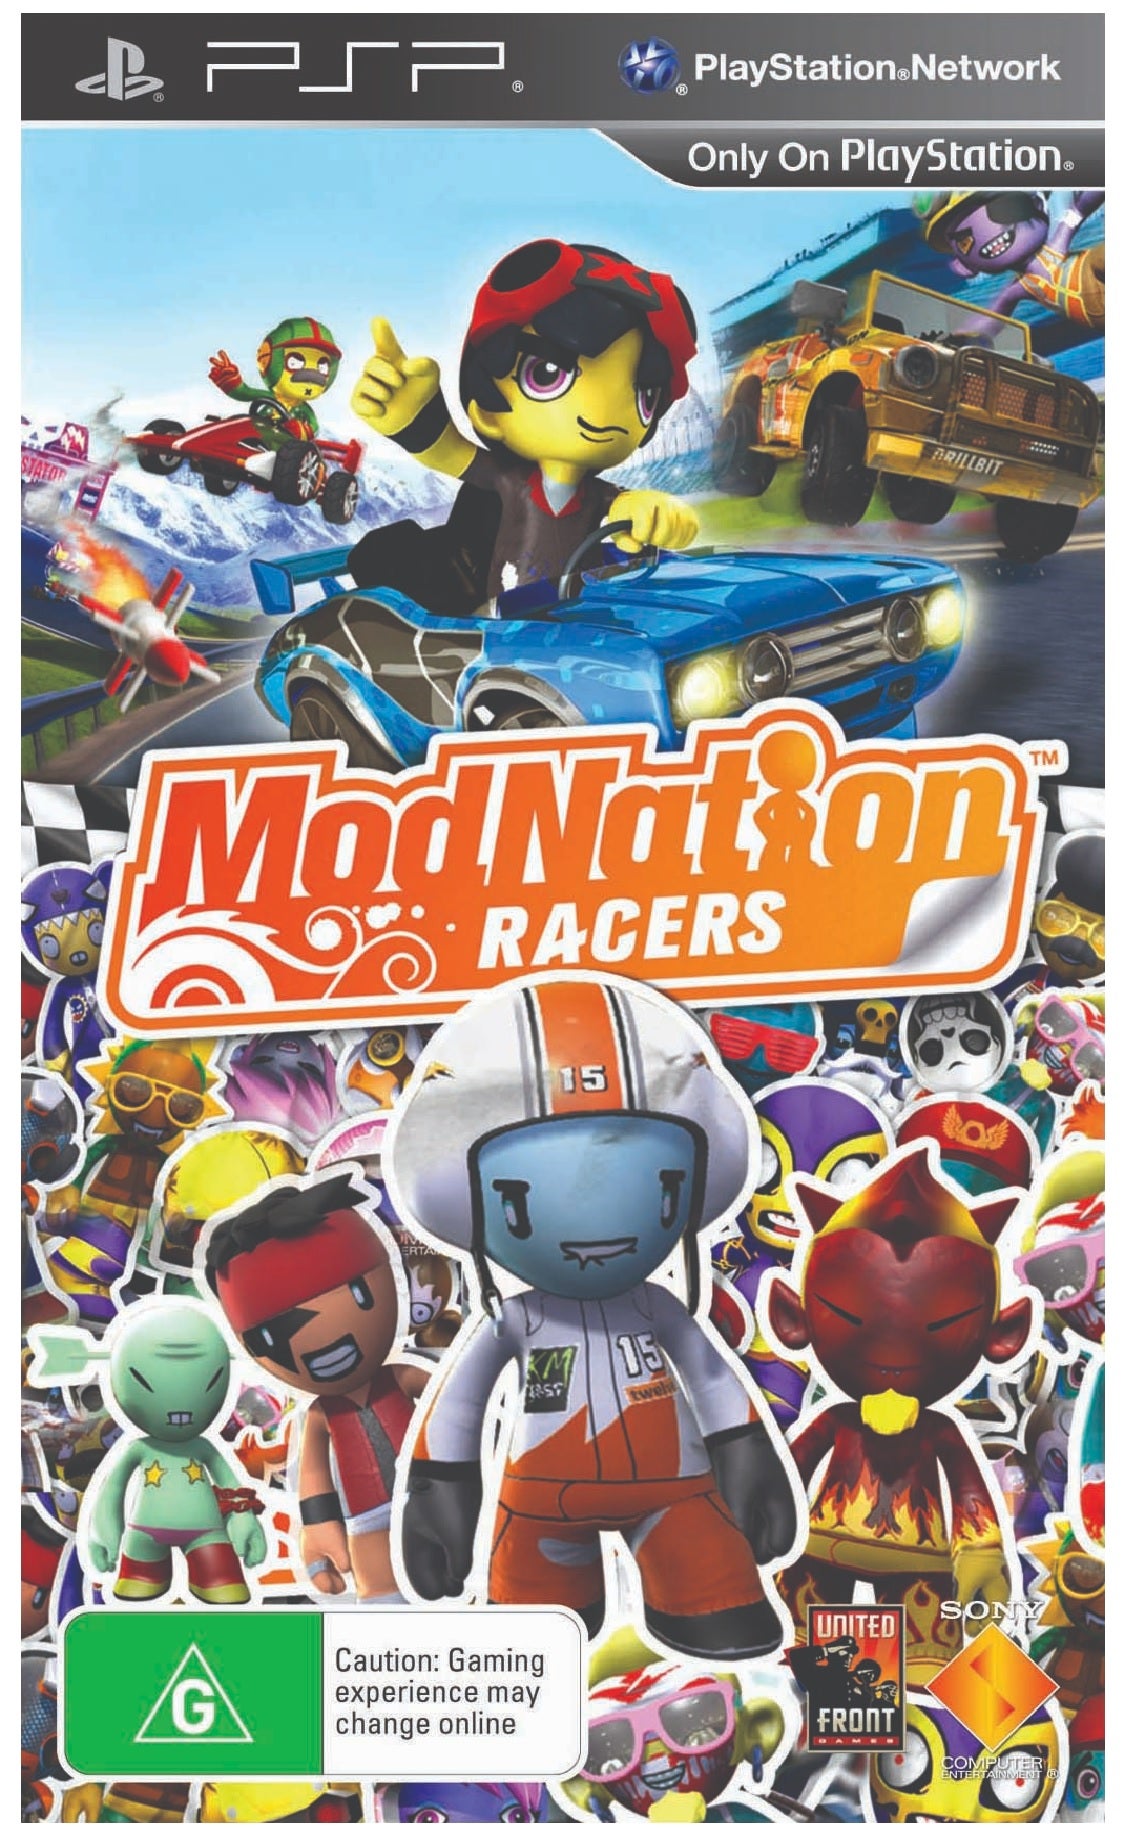 Sony Modnation Racers Refurbished PSP Game